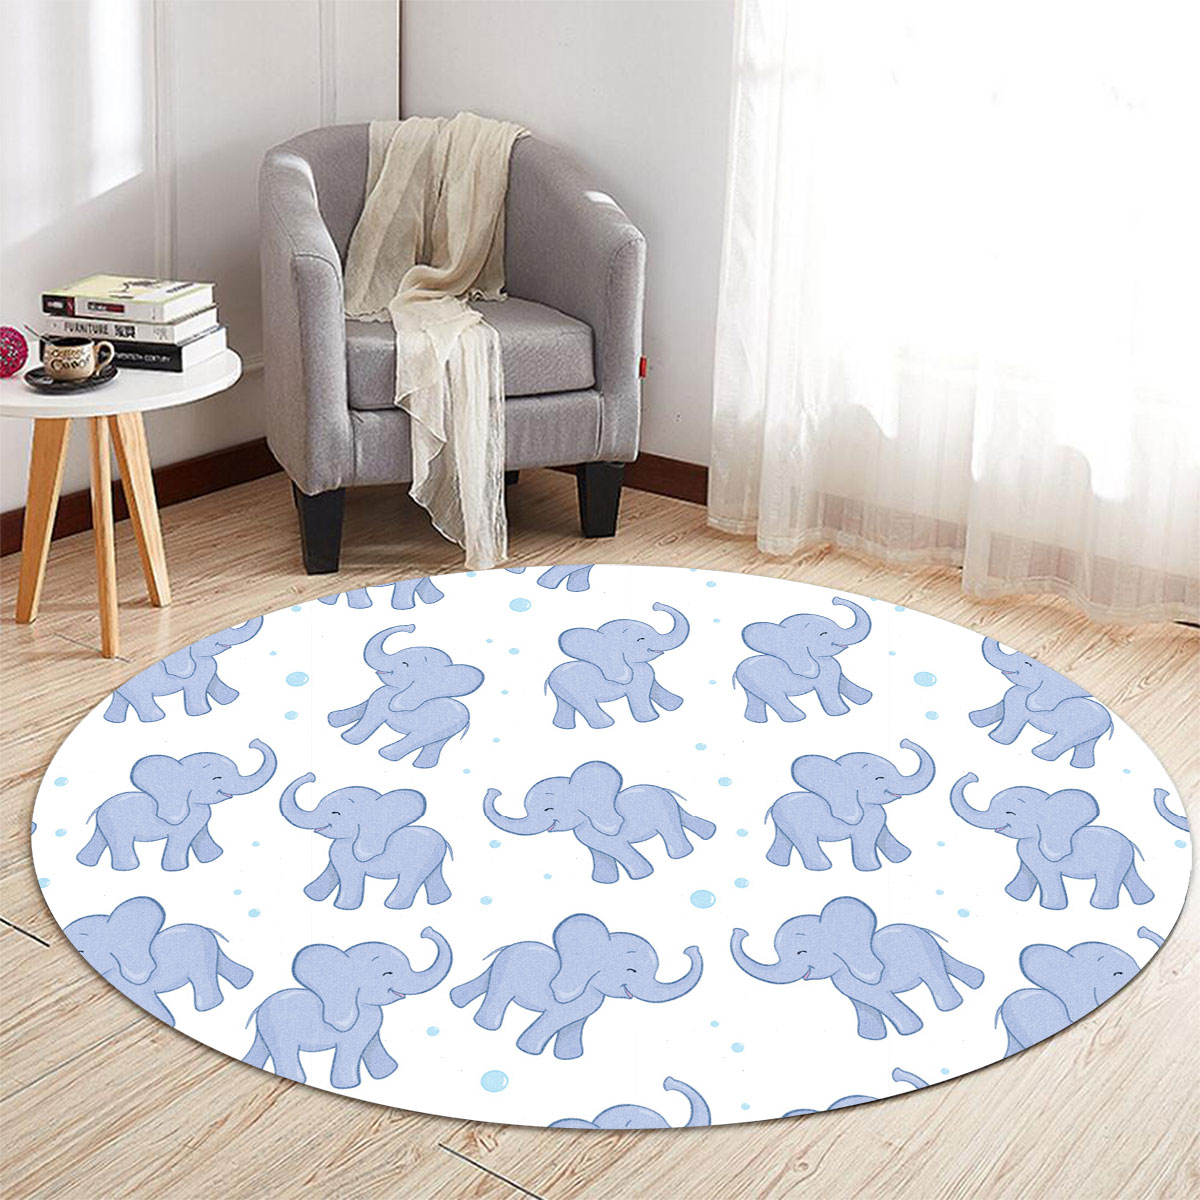 Funny Asian Elephant Round Carpet 6